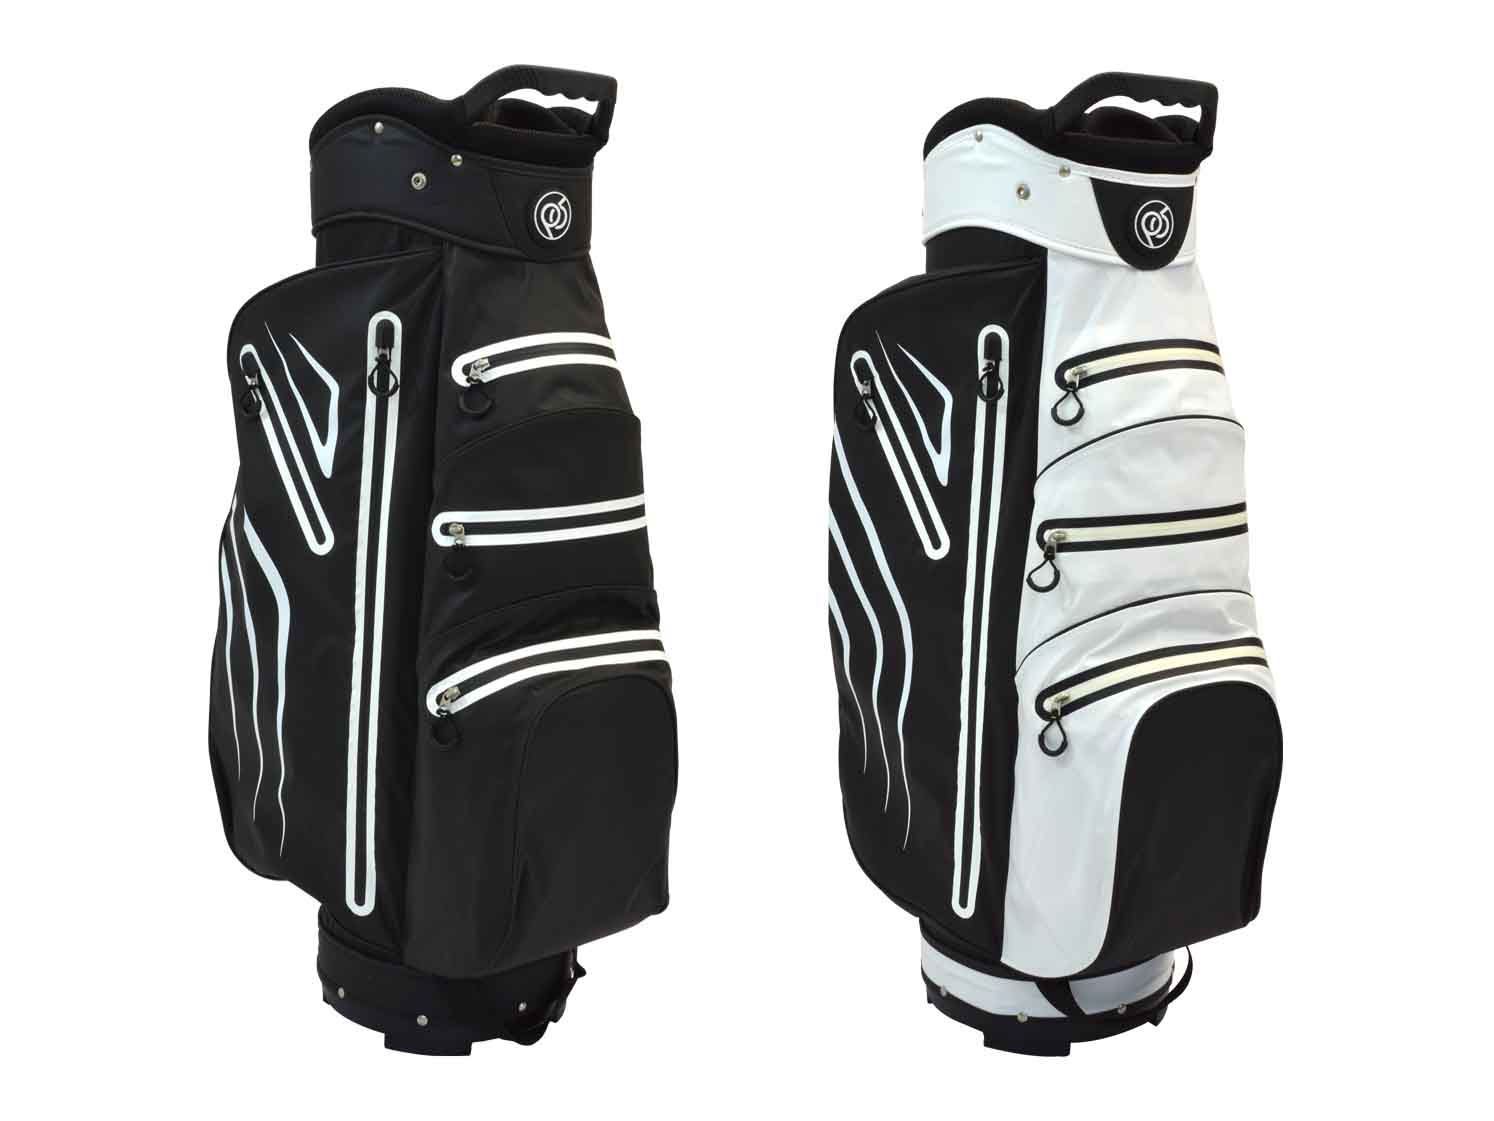 unveiled Powerbug waterproof bag | Monthly cart Golf